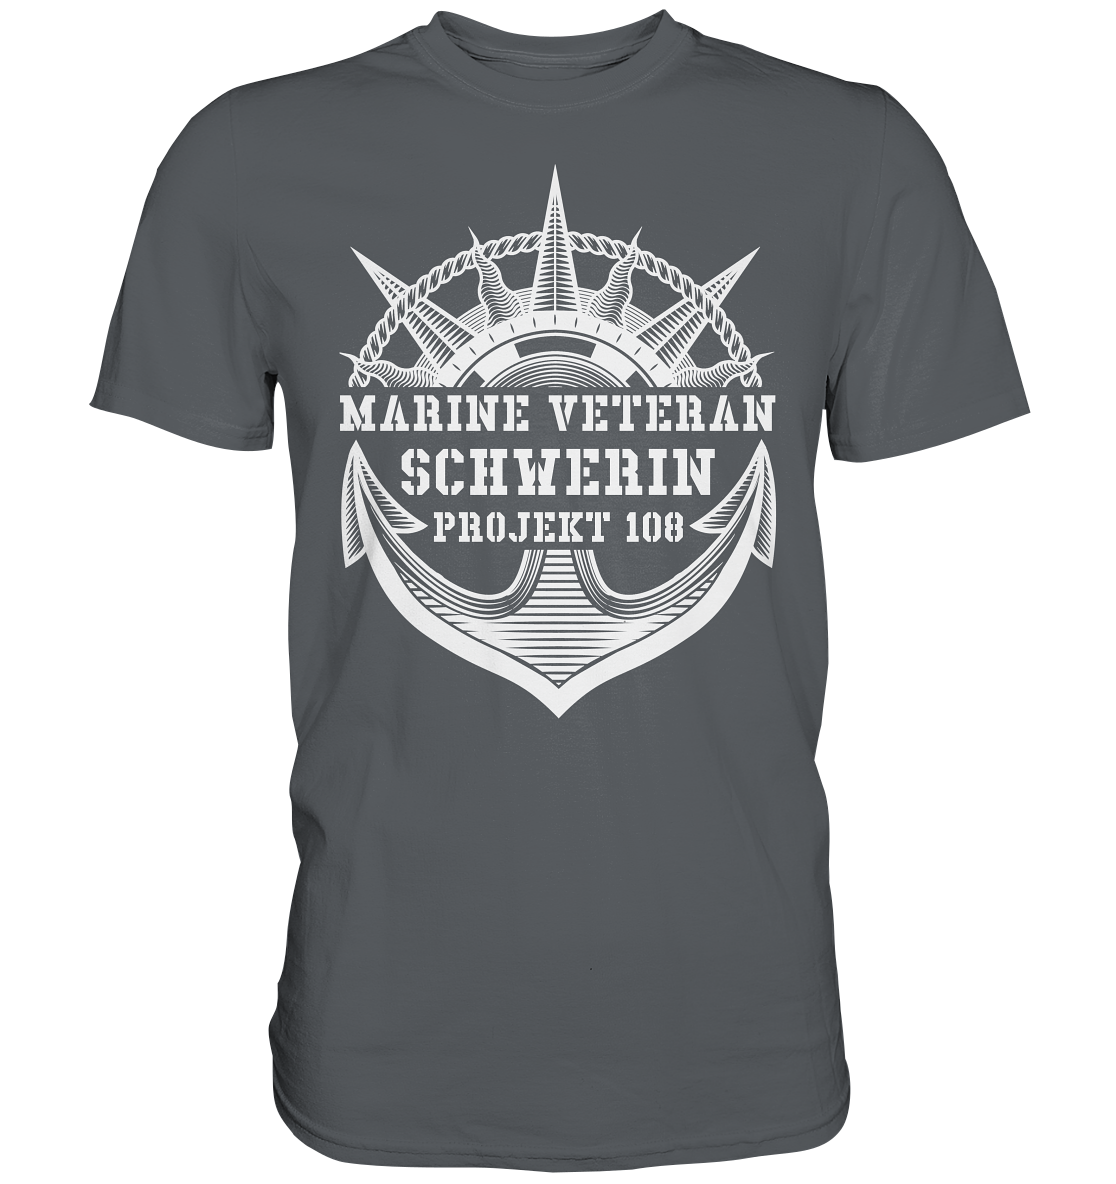 Projekt 108 SCHWERIN Marine Veteran - Premium Shirt